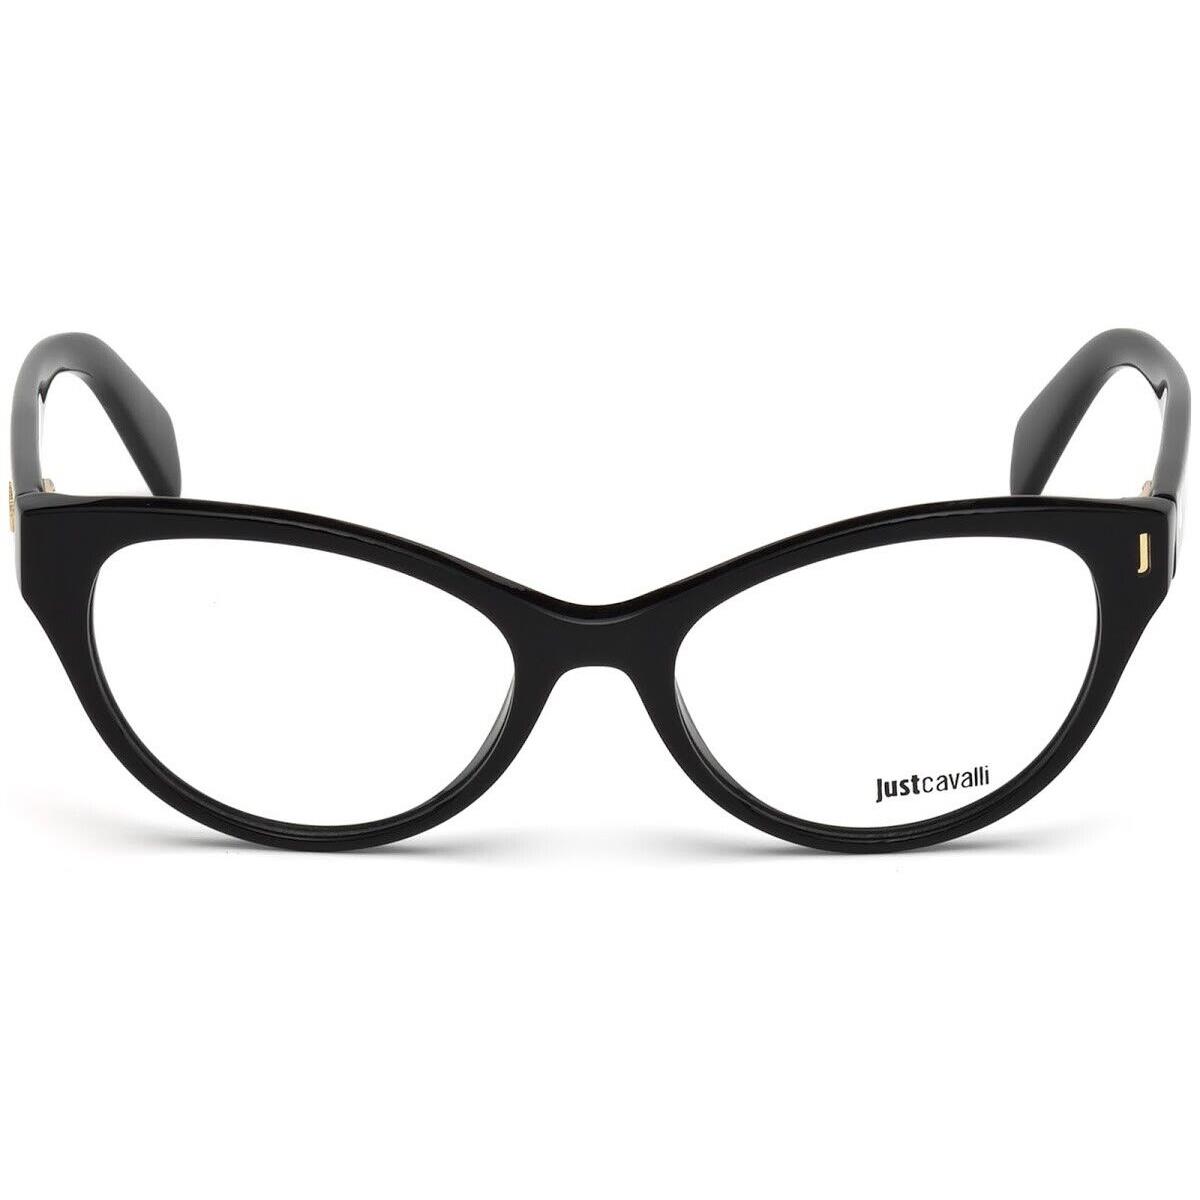 Just Cavalli JC0747 A01 Black Plastic Eyeglasses Frames 53-18-135 Cat Eye 0747